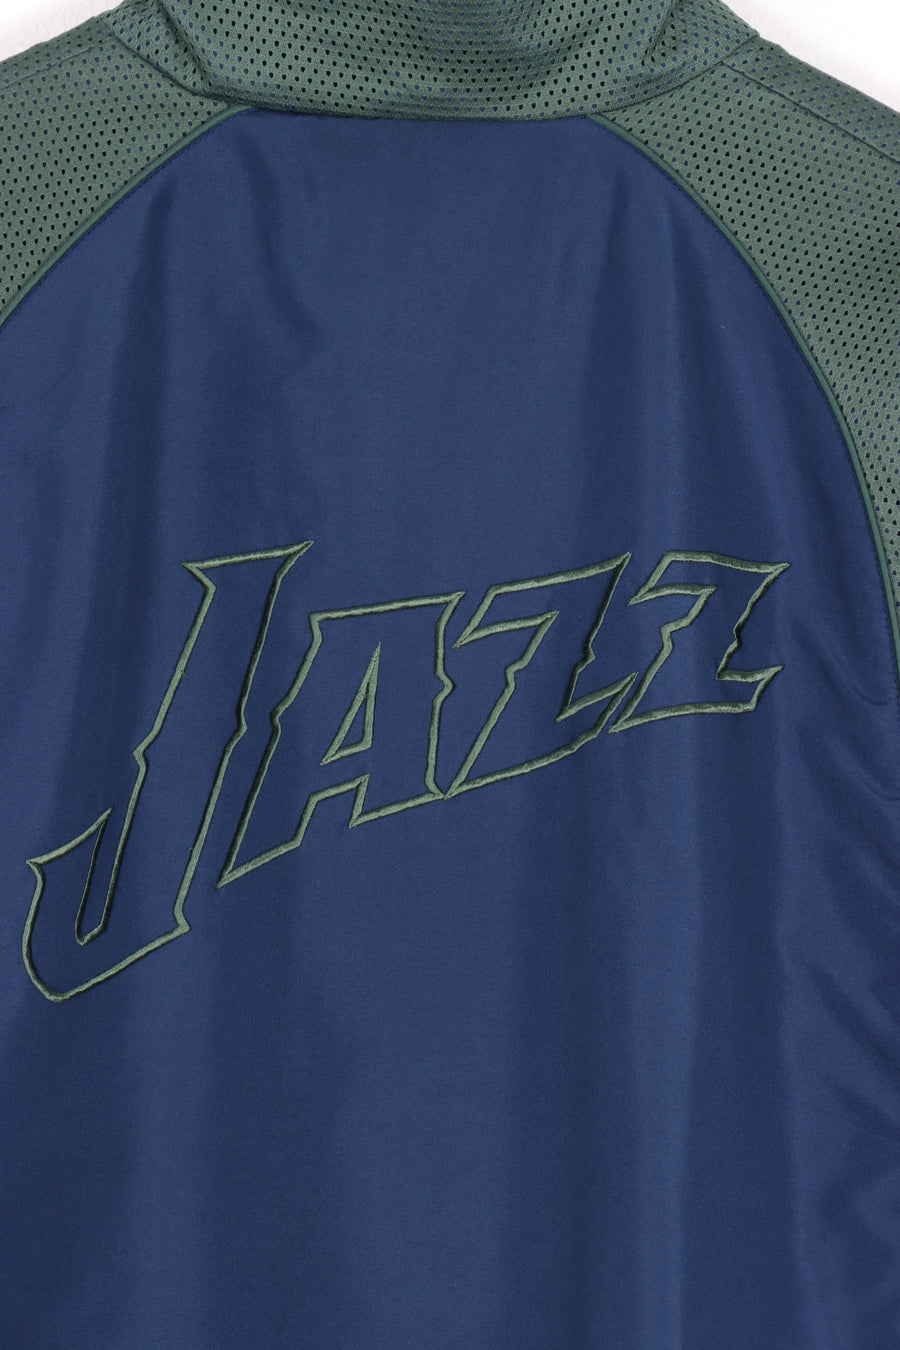 Utah Jazz NBA Basketball 1/4 Zip Thin Windbreaker (XXL)